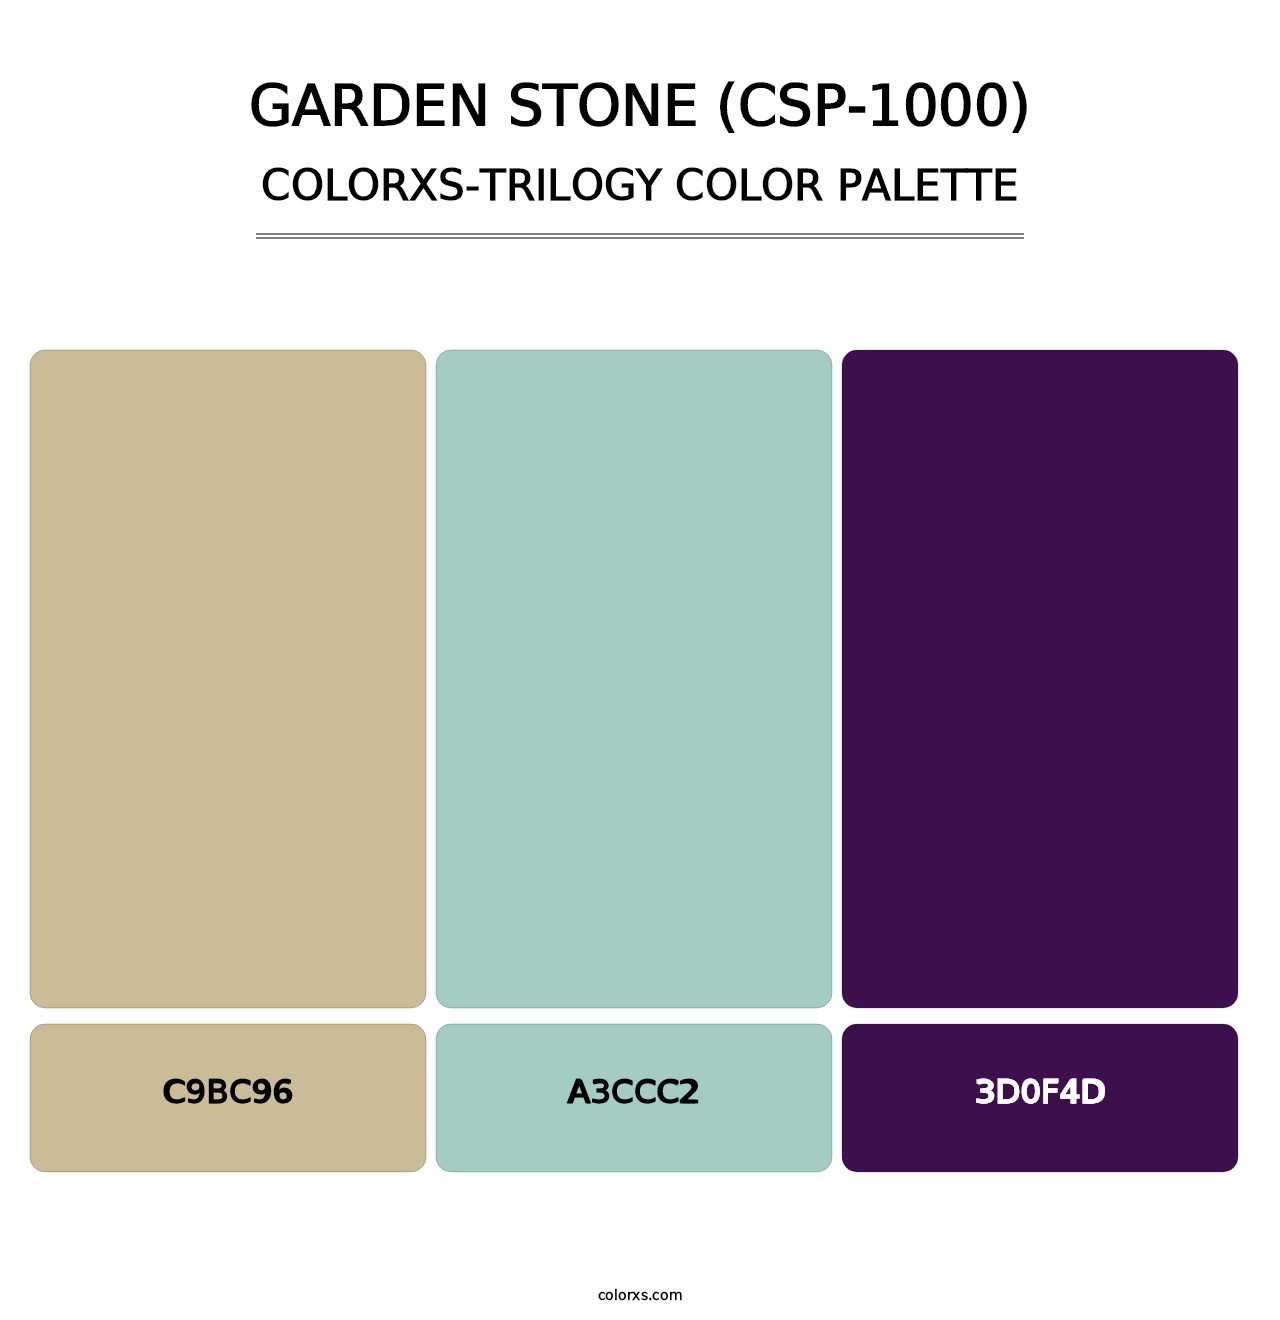 Garden Stone (CSP-1000) - Colorxs Trilogy Palette